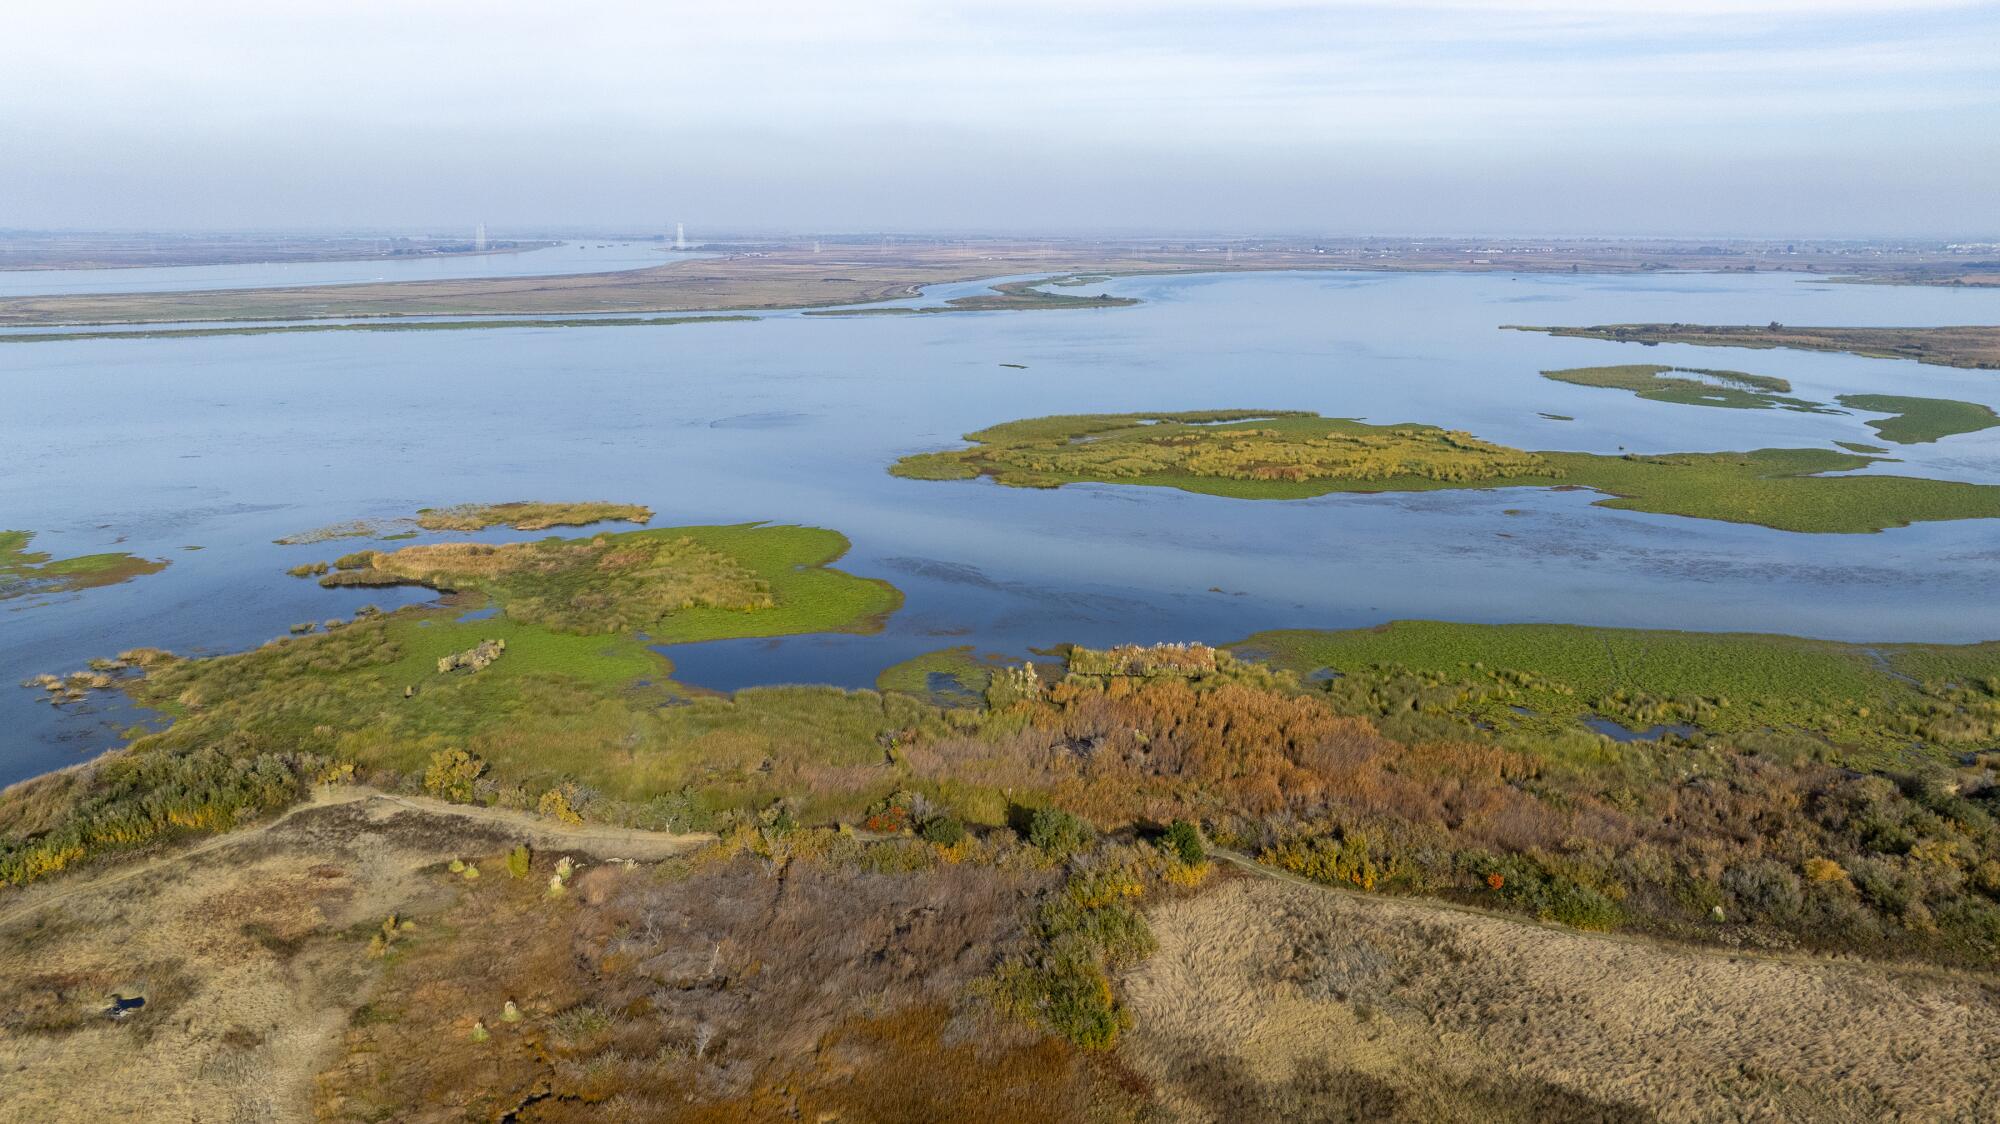 Wetlands spread along the shoreline at Big Break in the Sacramento-San Joaquin River Delta near Oakley.